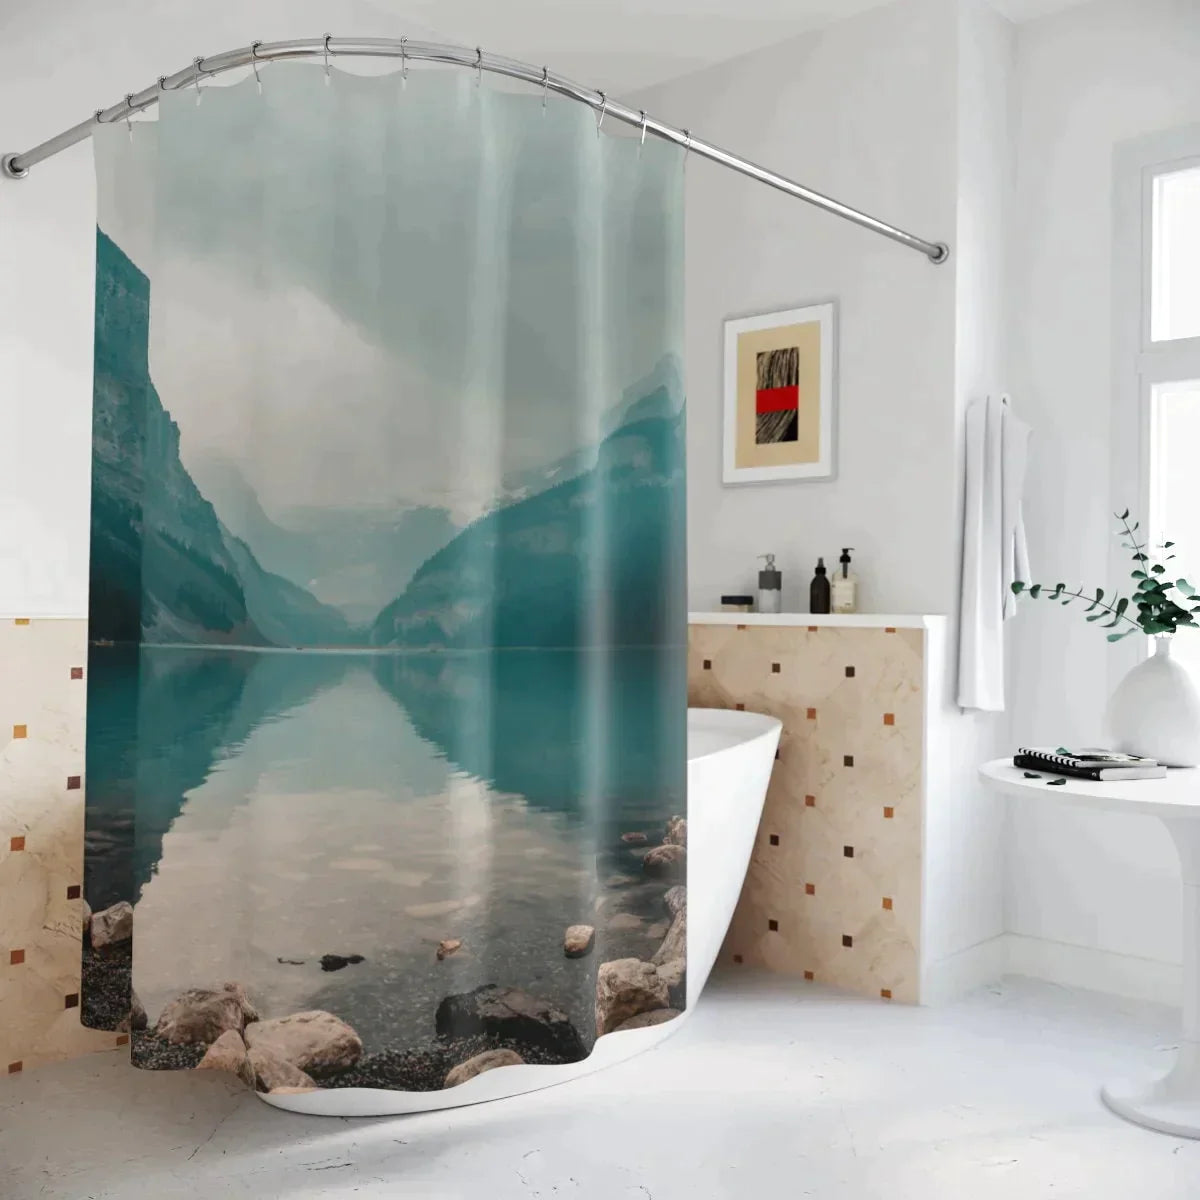 Boho Shower Curtain, Bobo Bathroom Accessories, Scenic Shower Curtain, Cute Hippie Home Decor, Unique Shower Curtain, Extra Long Curtain